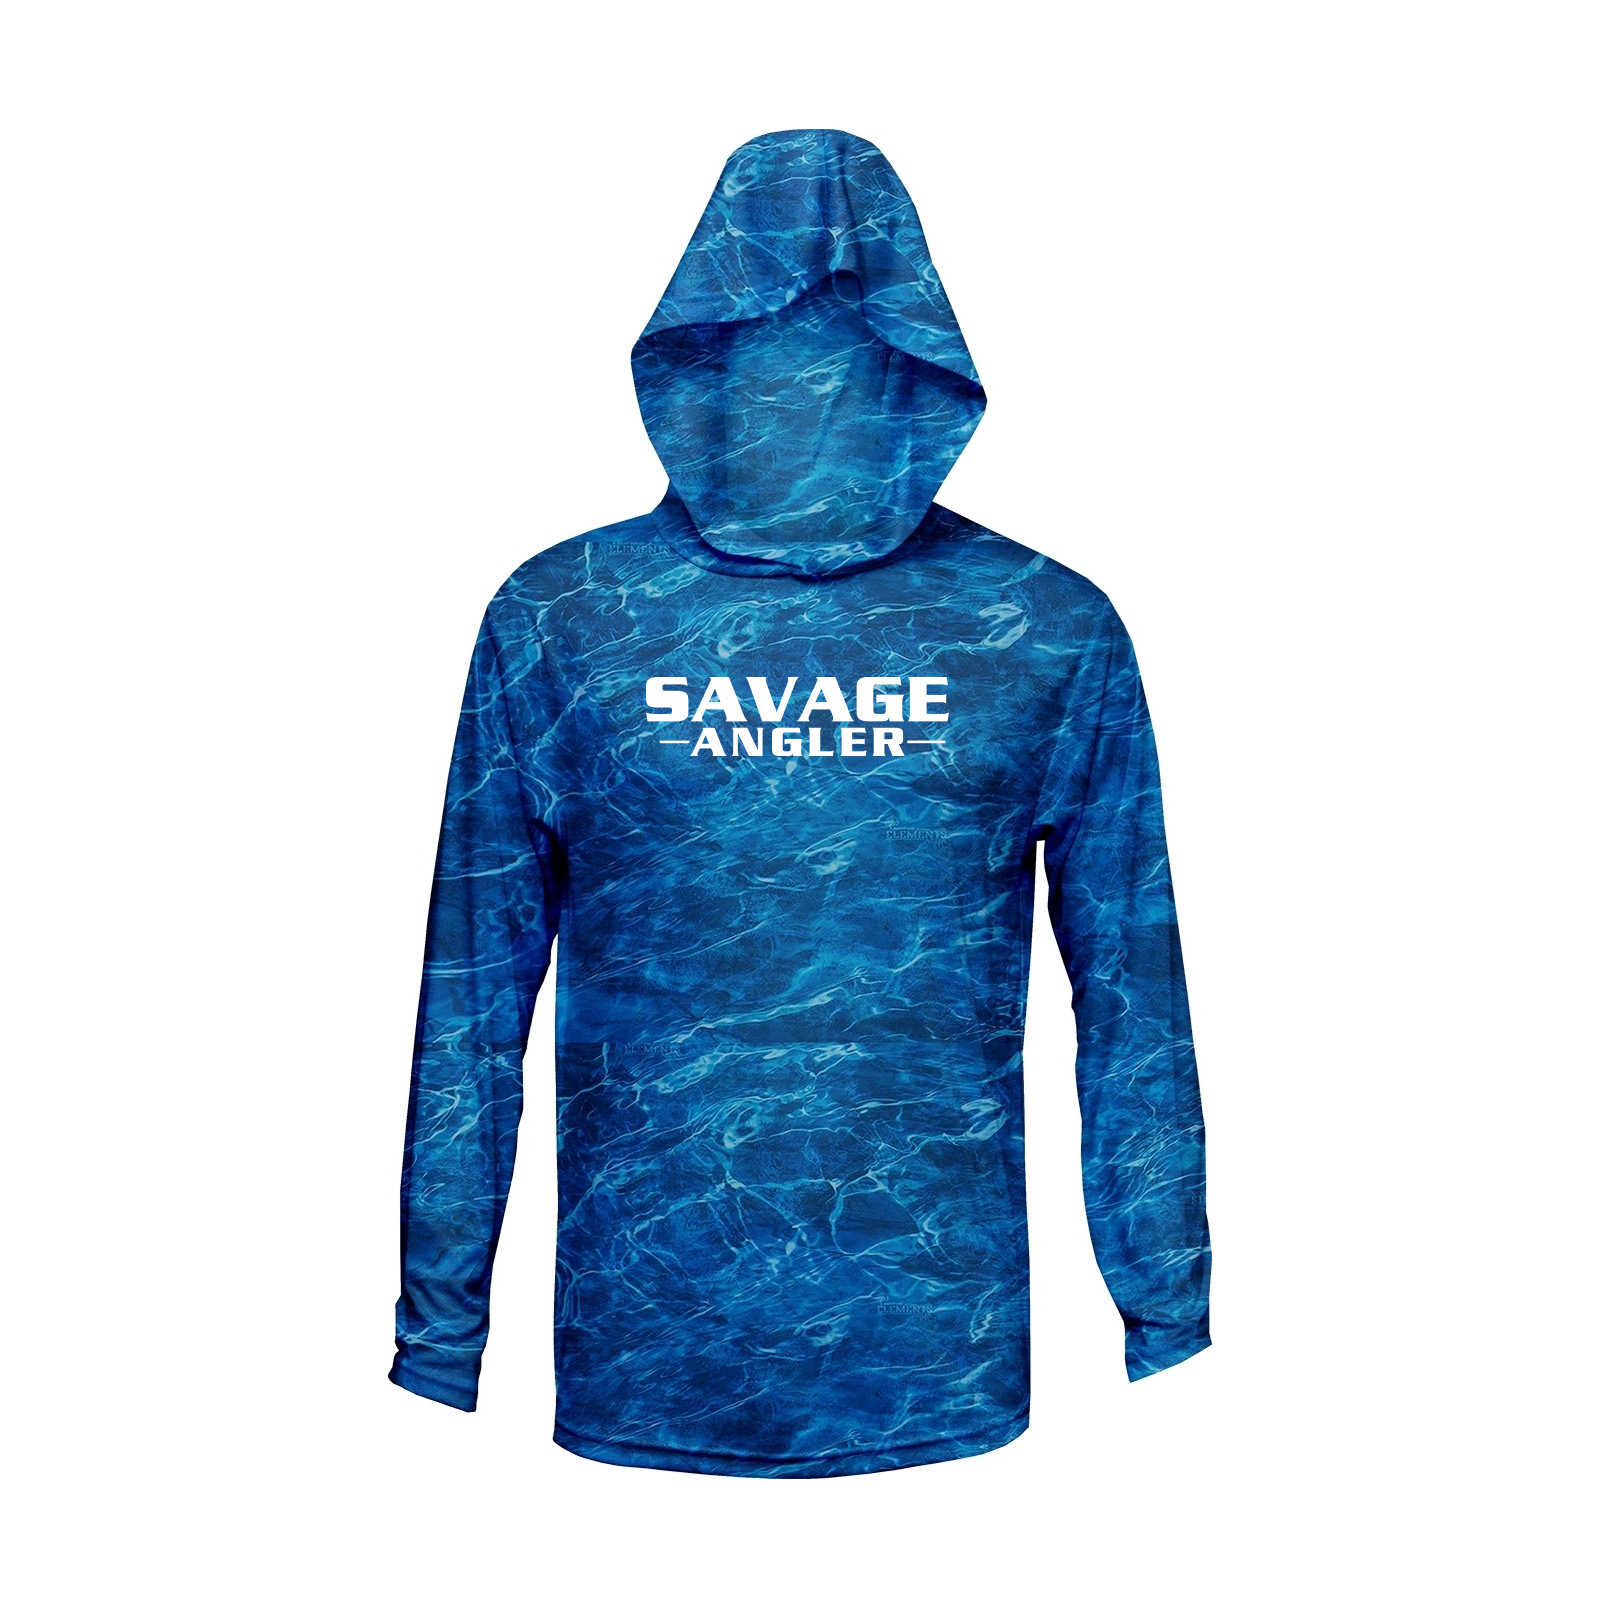 https://savageangler.com/wp-content/uploads/2021/09/Savage-Angler-Mossy-Oak-Elements-Long-Sleeve-Hoodie_Blue.jpg